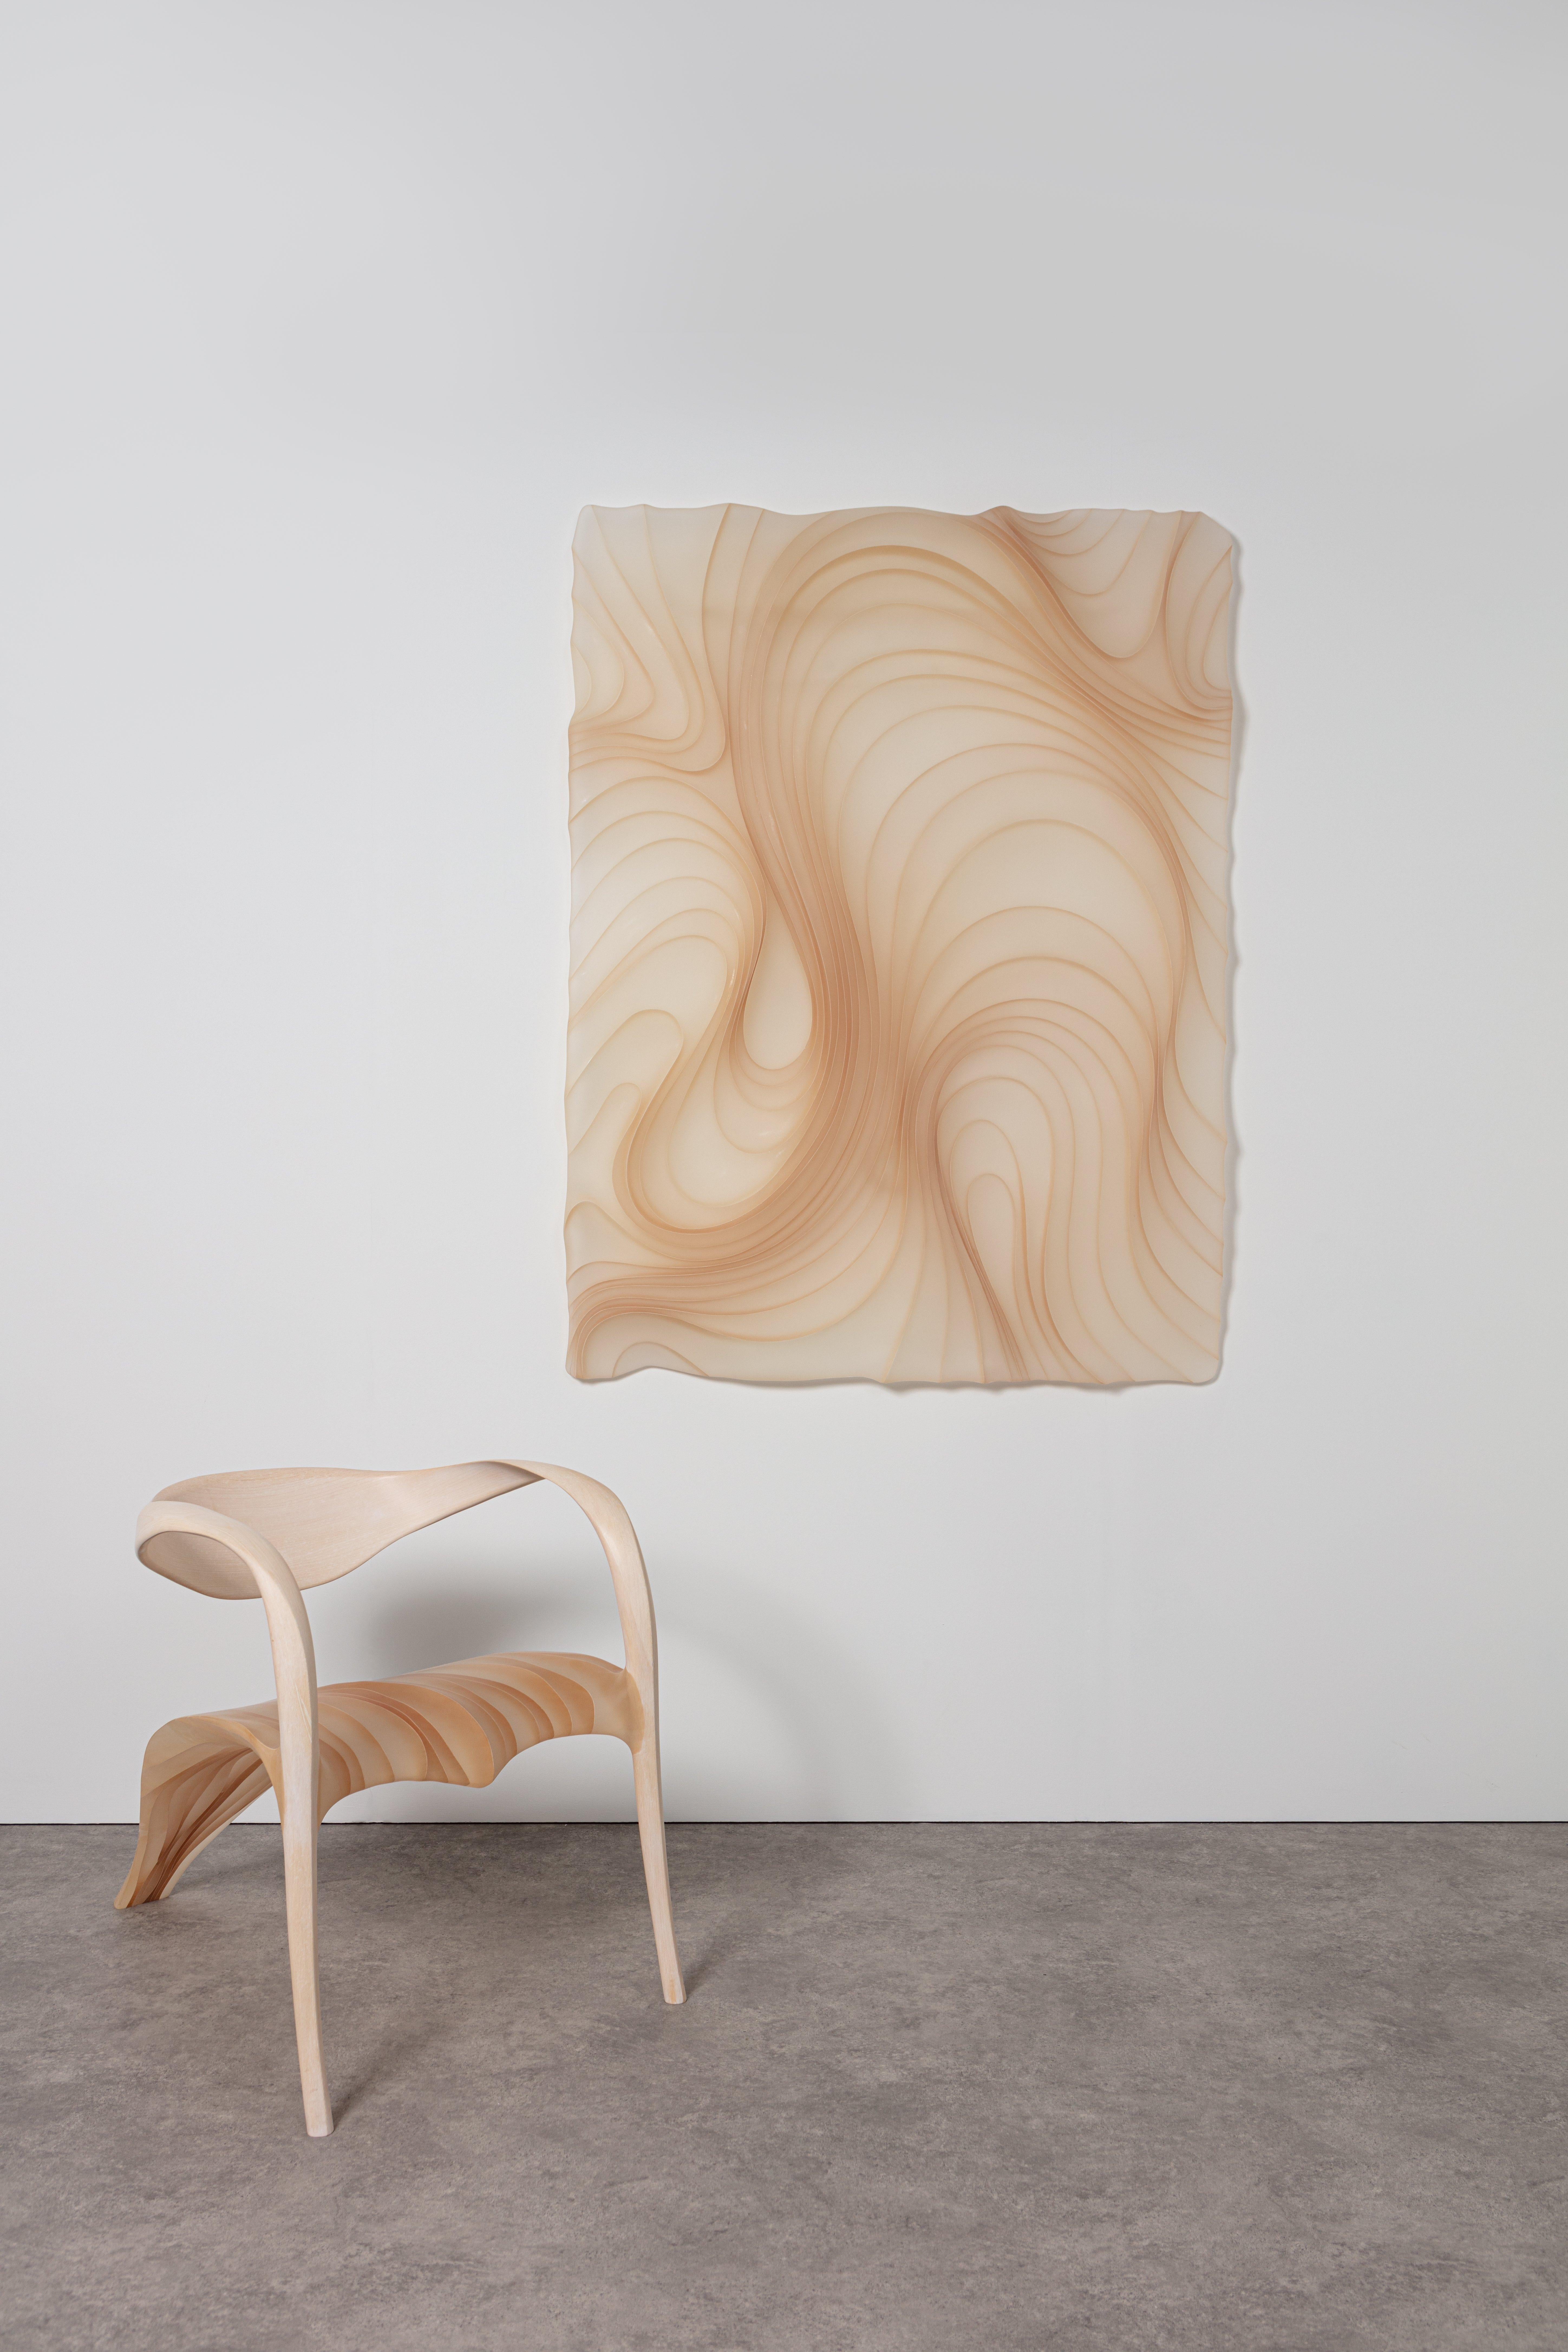 Organic Modern Marc Fish, Ethereal Single Wall Panel. For Sale